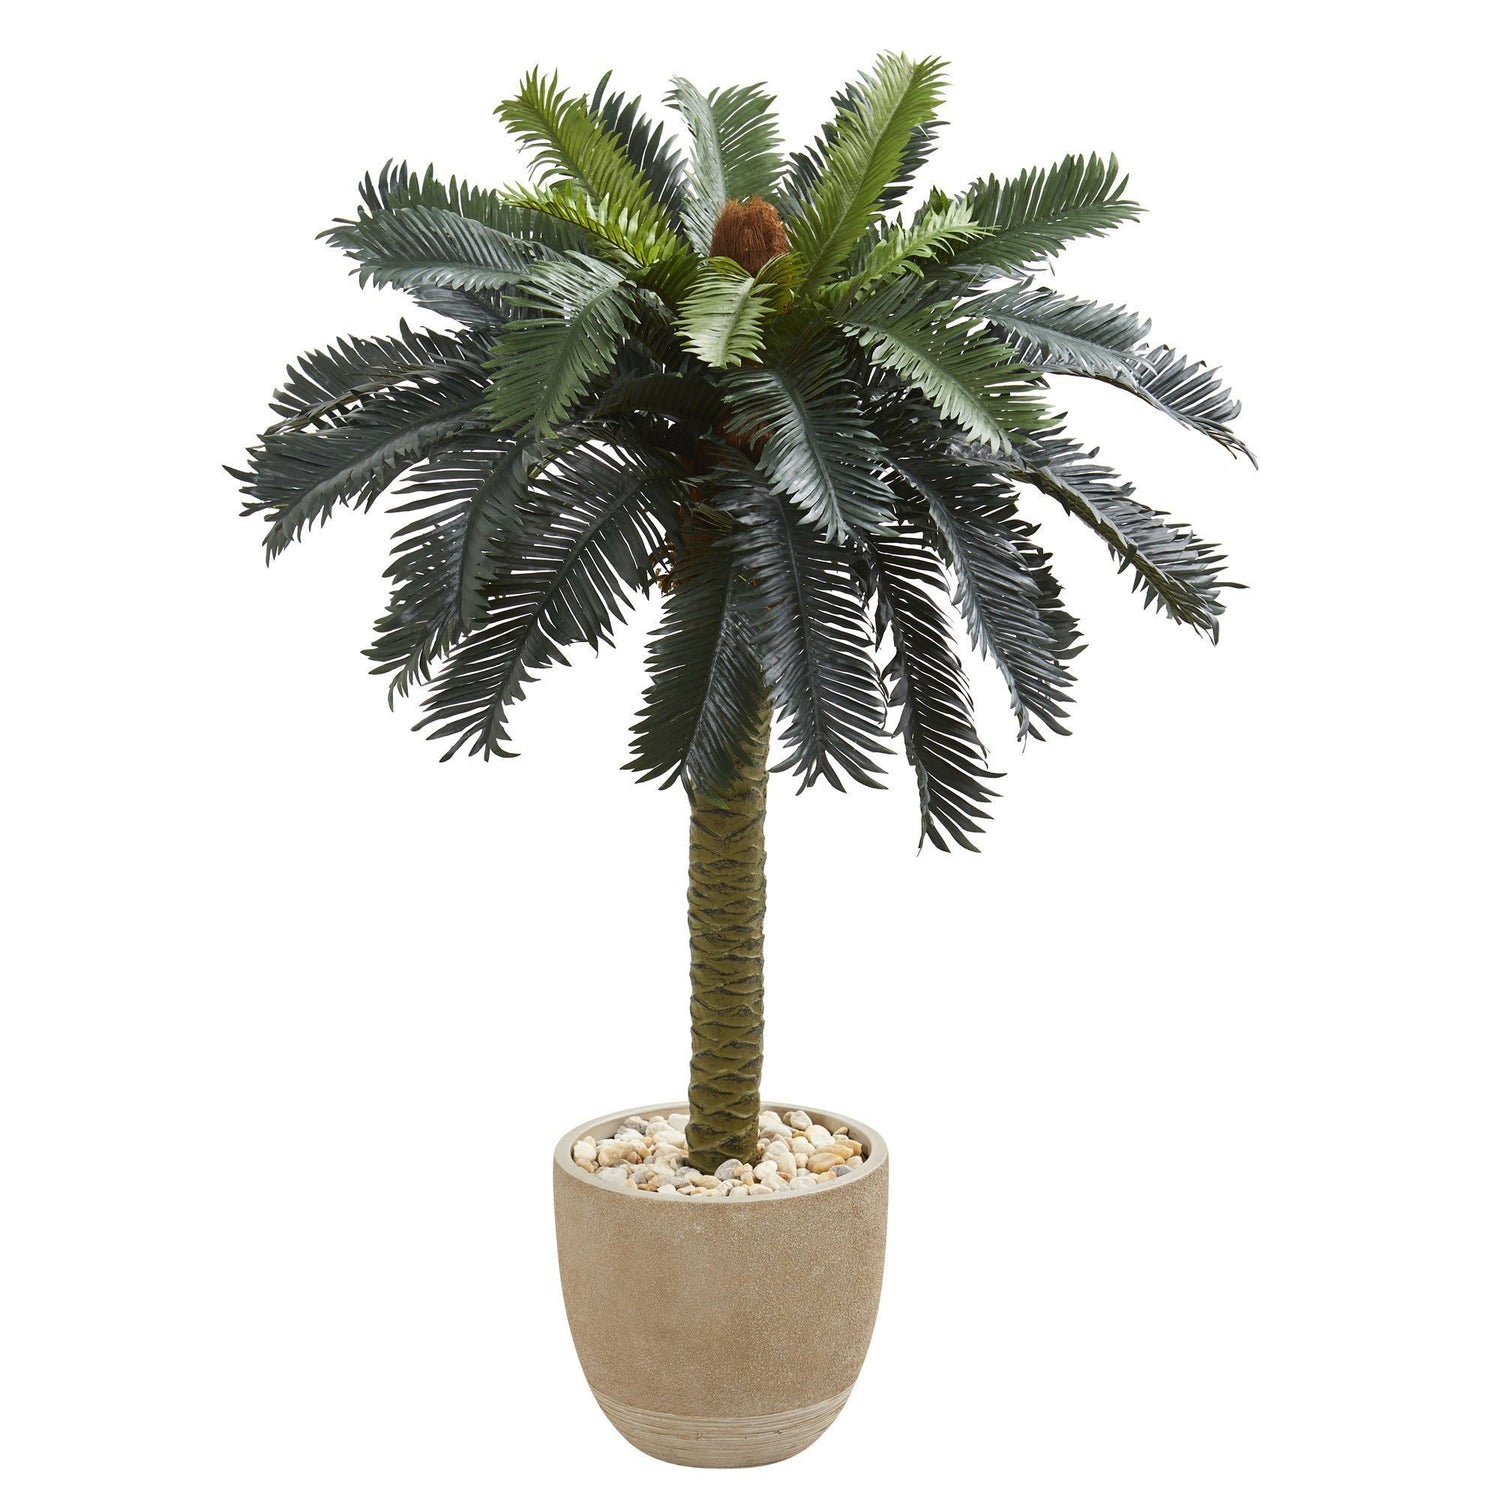 3.5’ Sago Palm Artificial Tree in Sandstone Planter